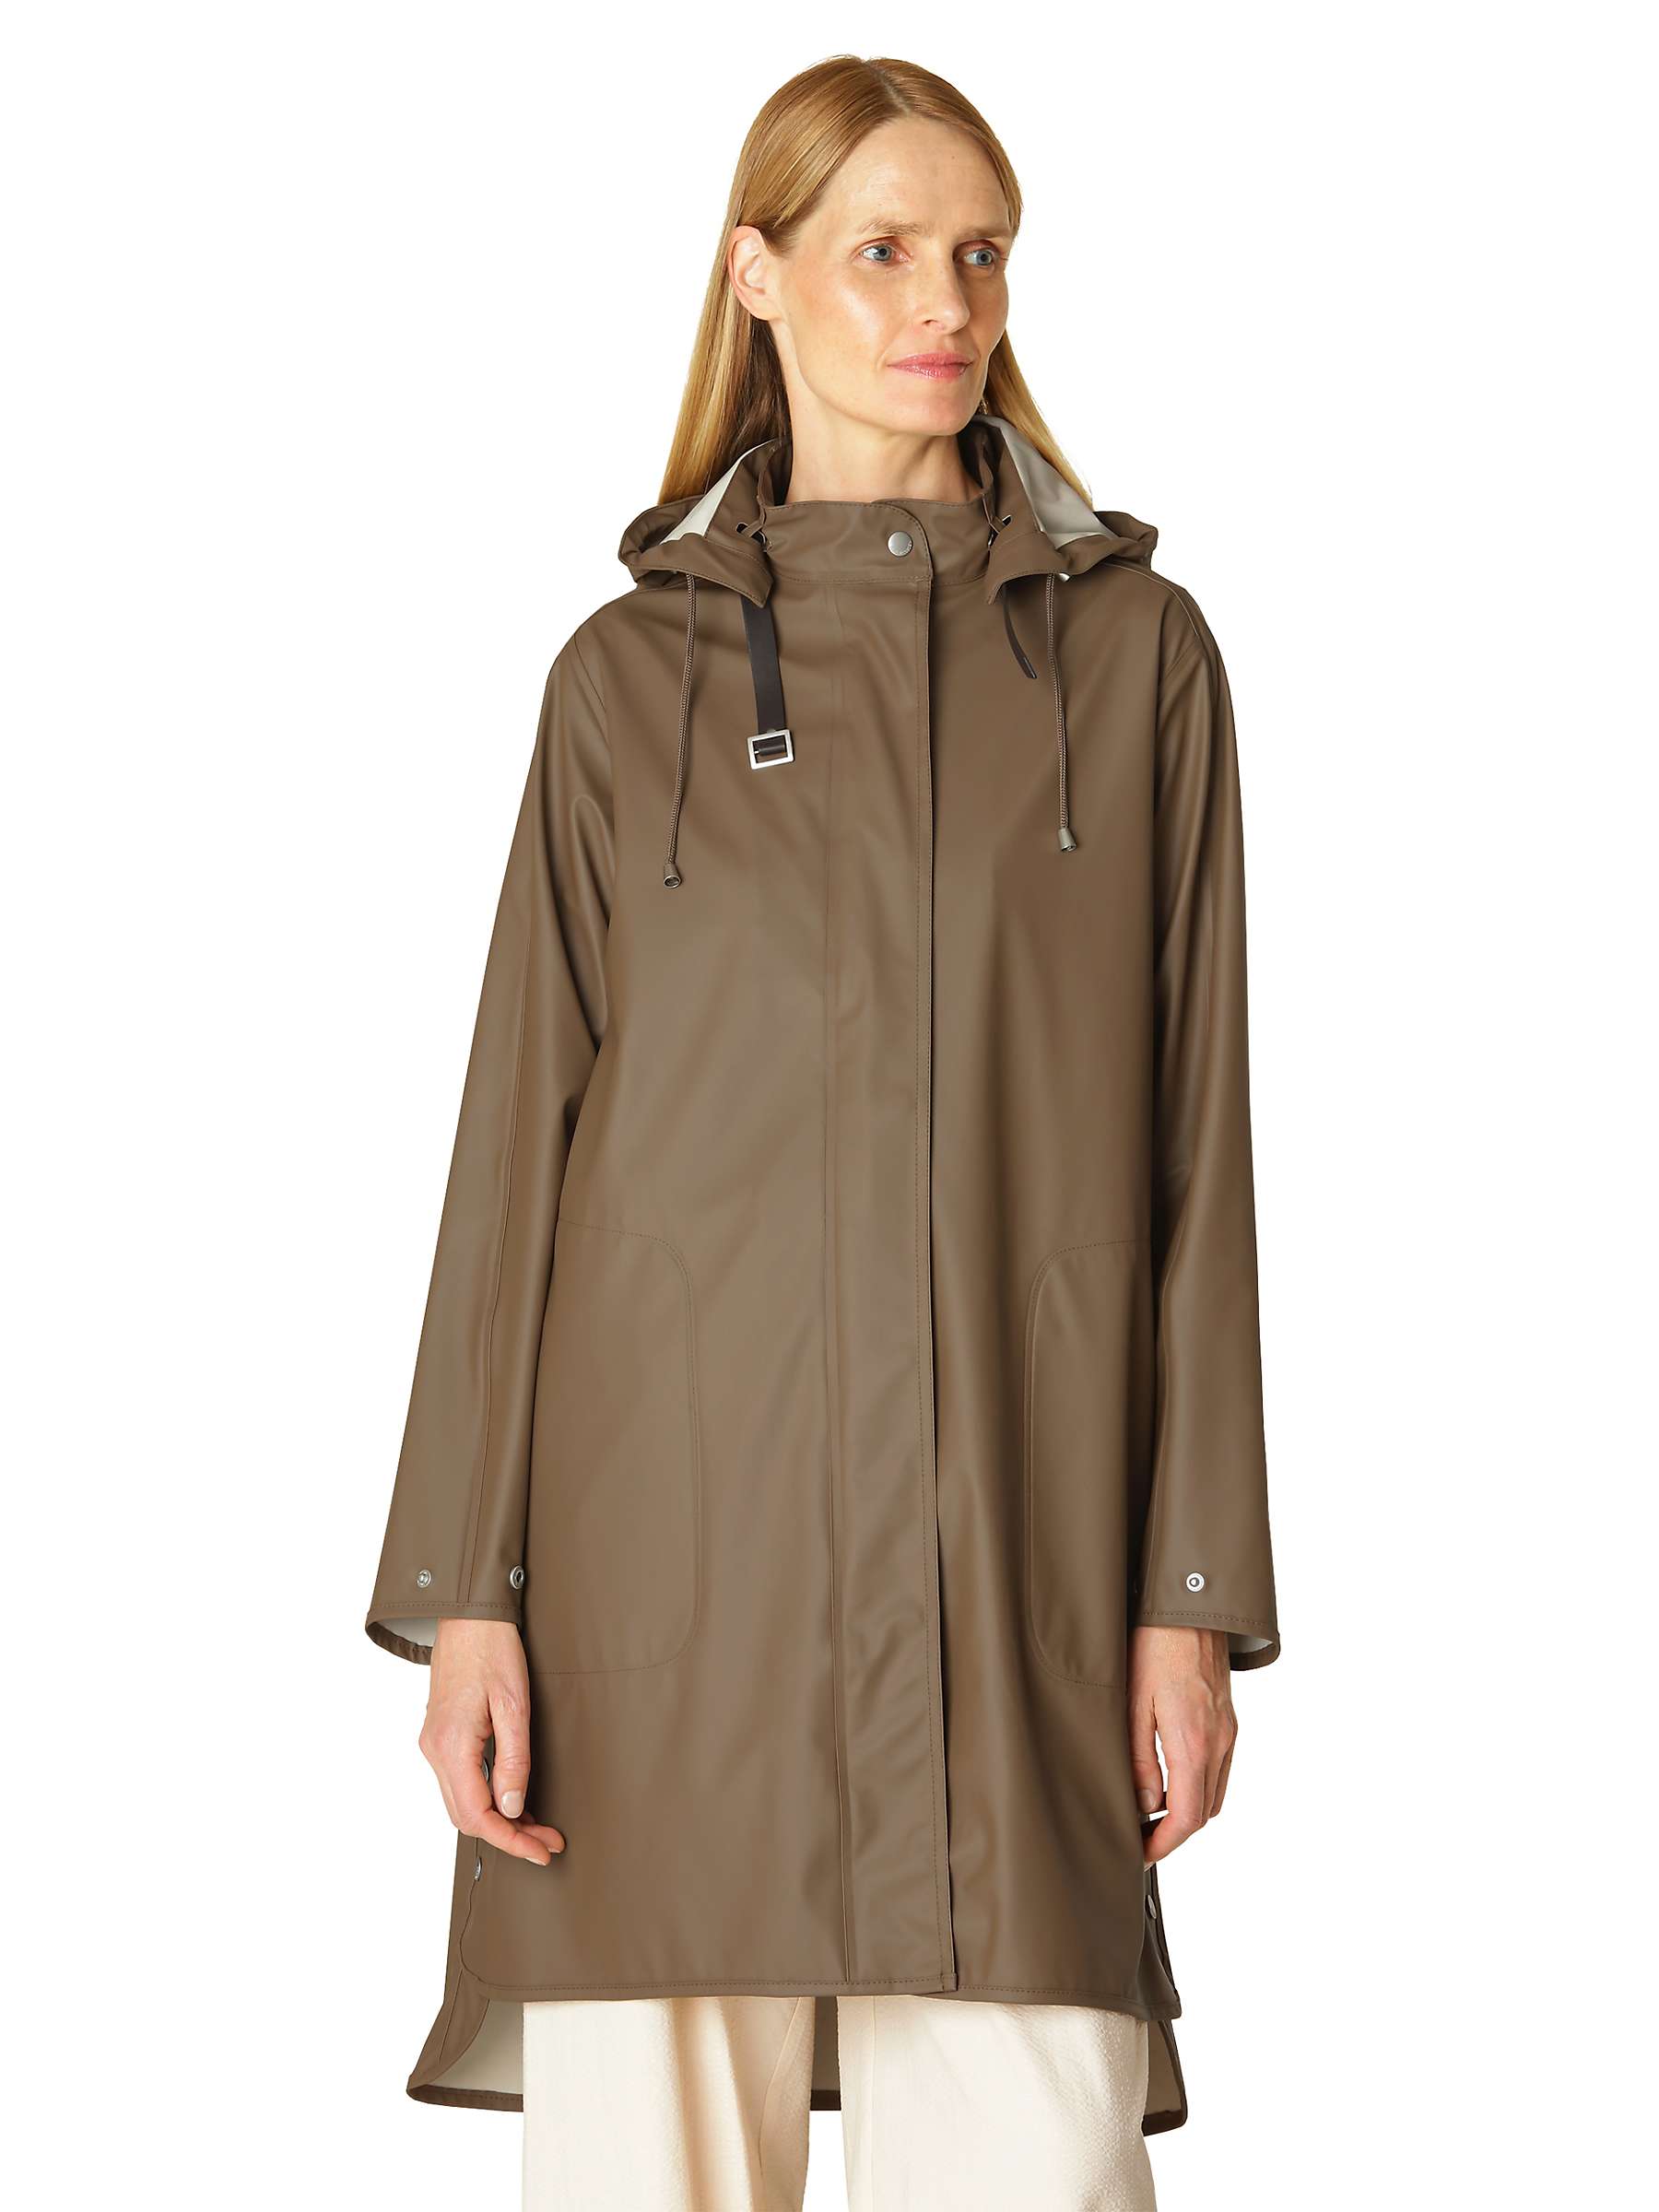 Buy Ilse Jacobsen Hornbæk 71 Hooded Raincoat, Cub Brown Online at johnlewis.com